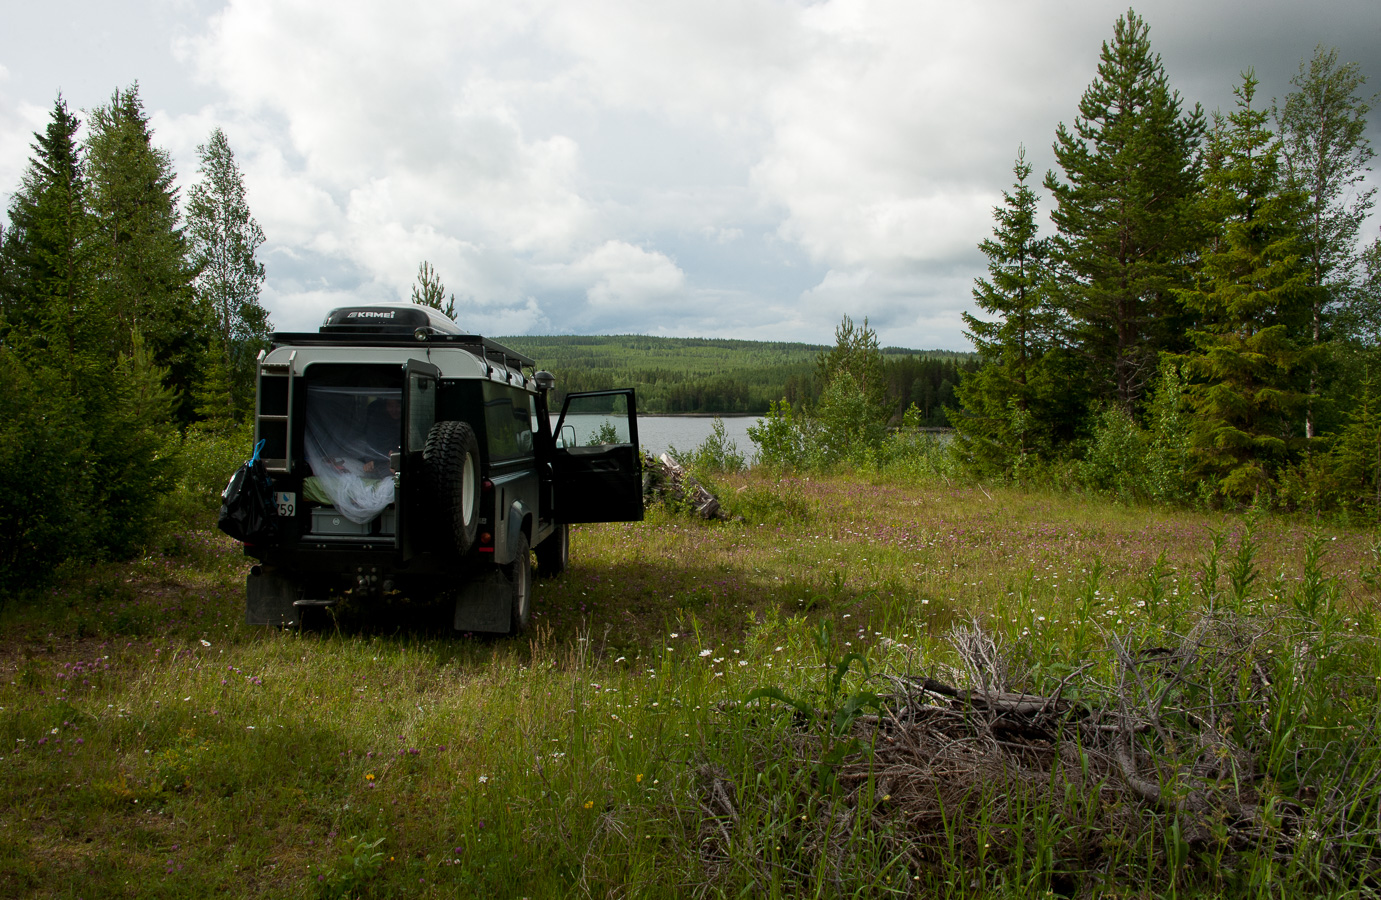 Schweden - Wilderness route [28 mm, 1/250 sec at f / 18, ISO 500]